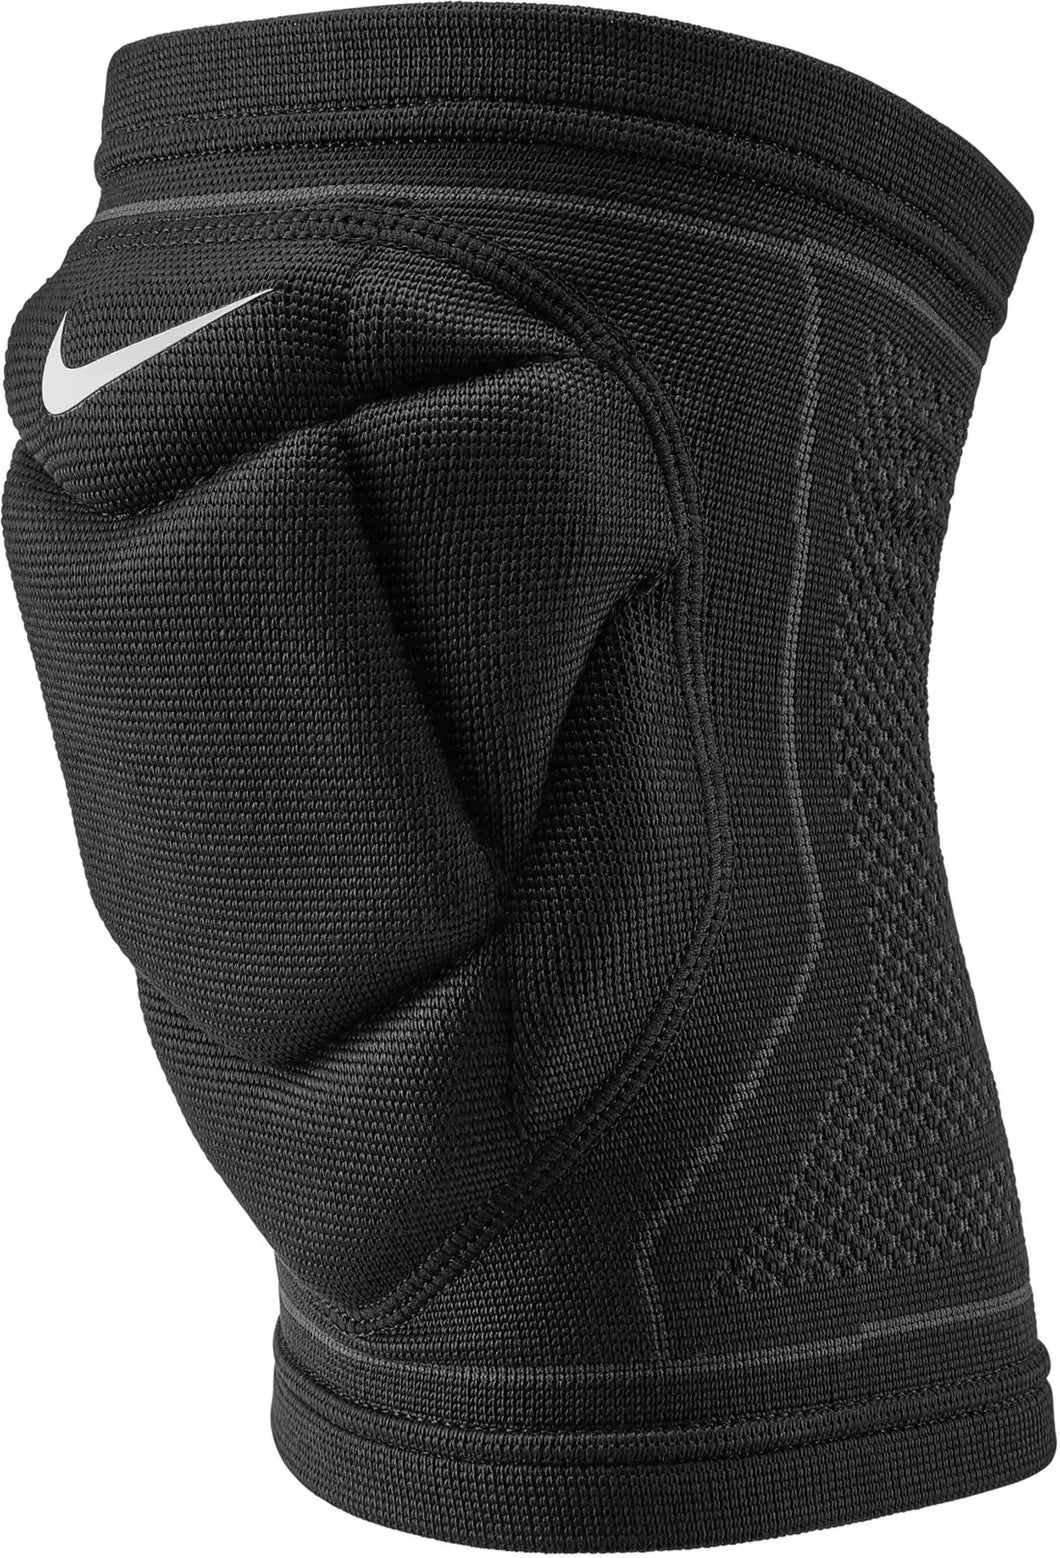 Nike Vapor Elite Volleyball Kneepad - black